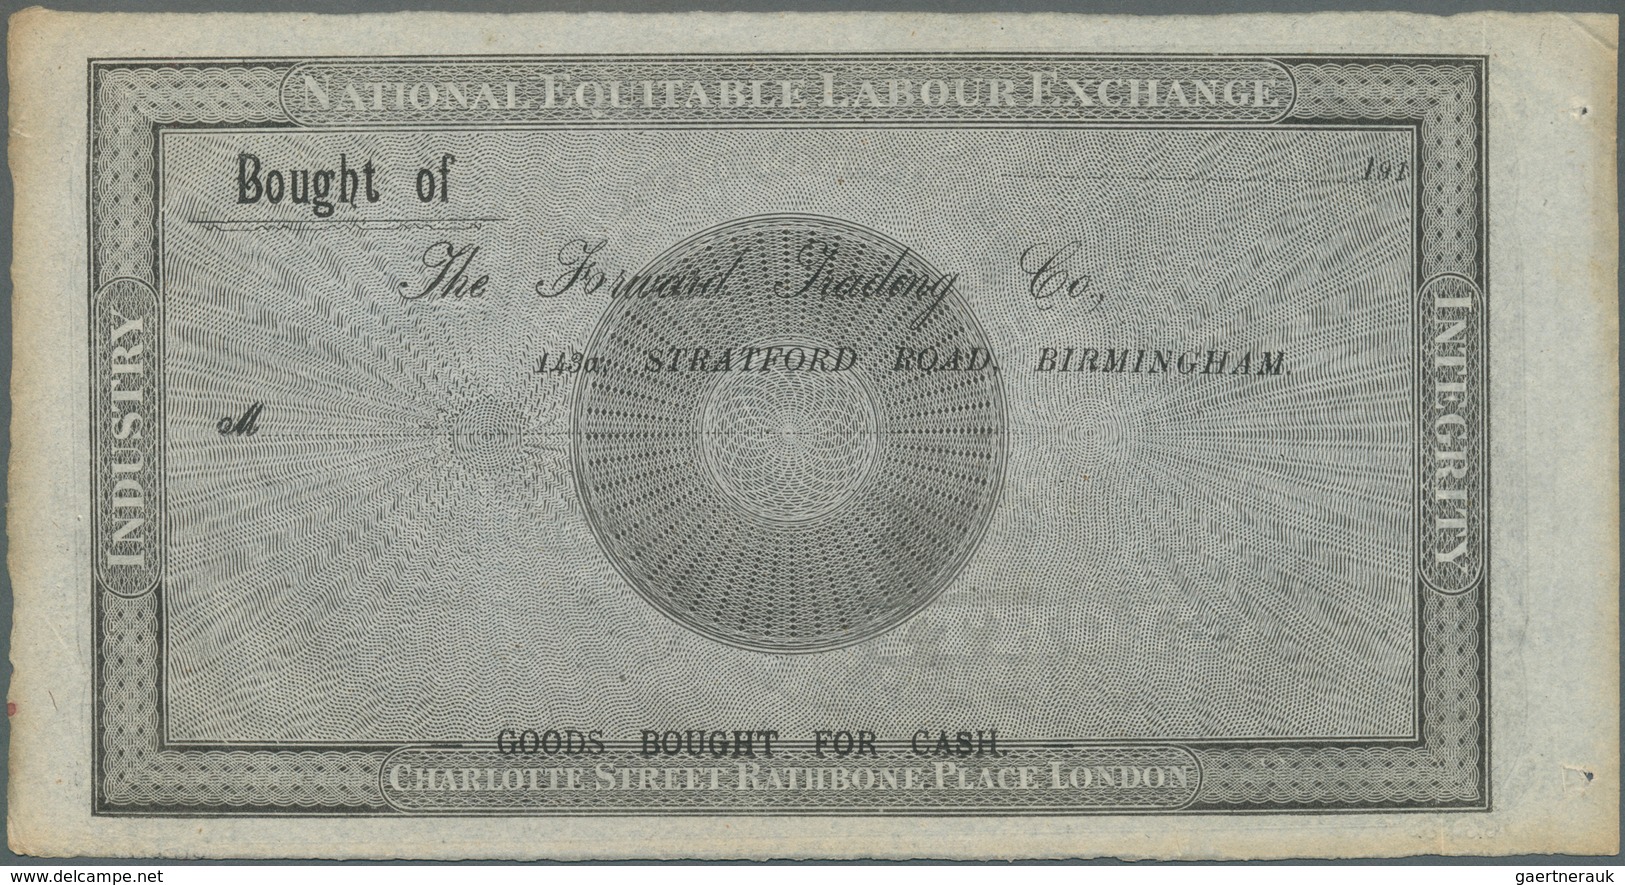 Great Britain / Großbritannien: 80 Hours 1833 Remainder Note Of The National Equitable Labour Exchan - Otros & Sin Clasificación